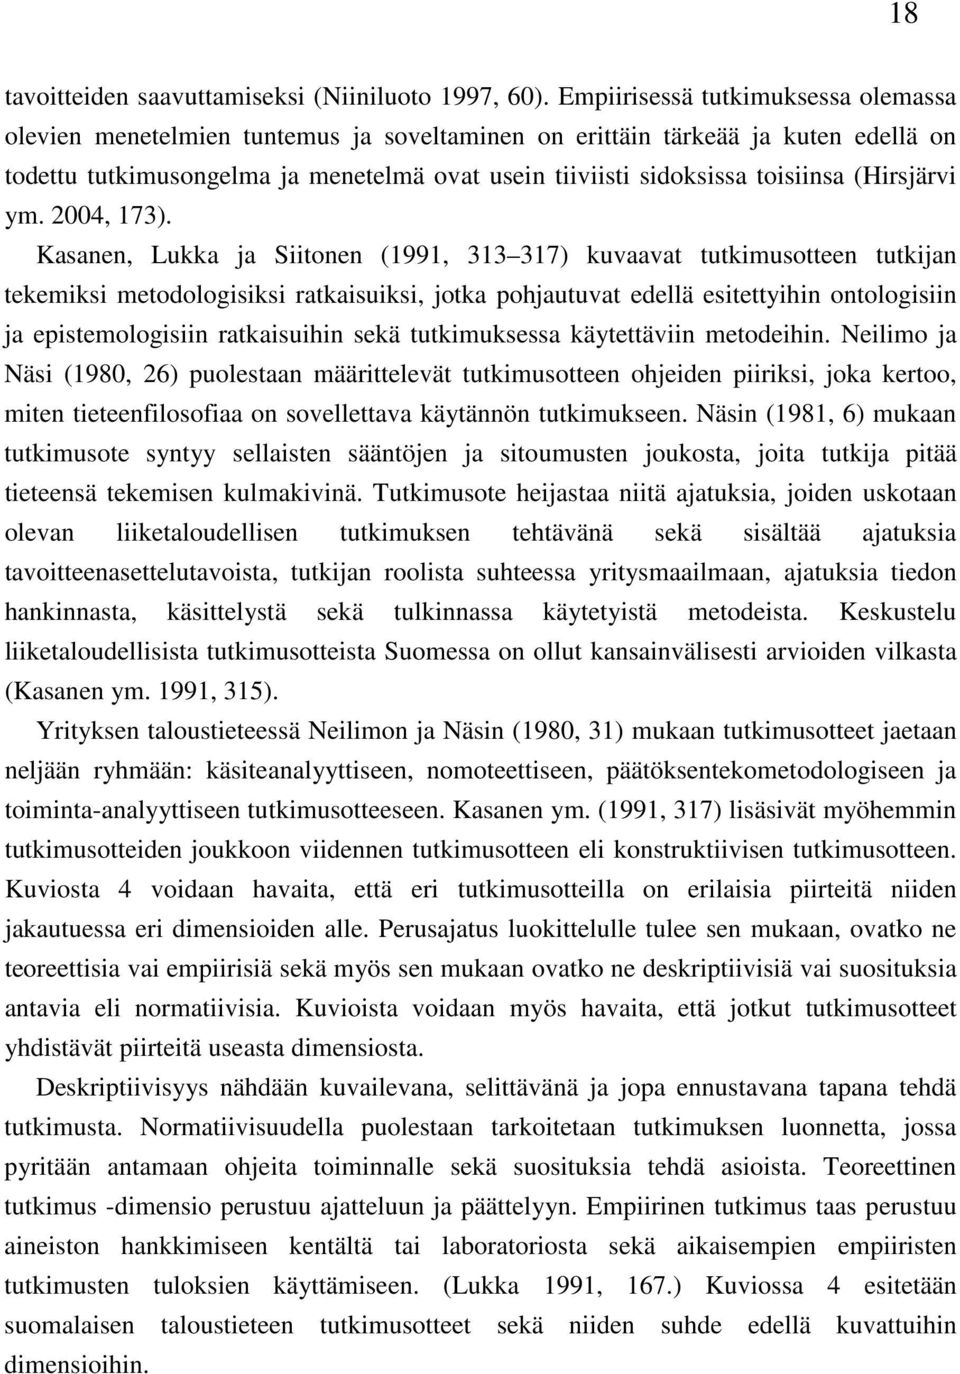 (Hirsjärvi ym. 2004, 173).